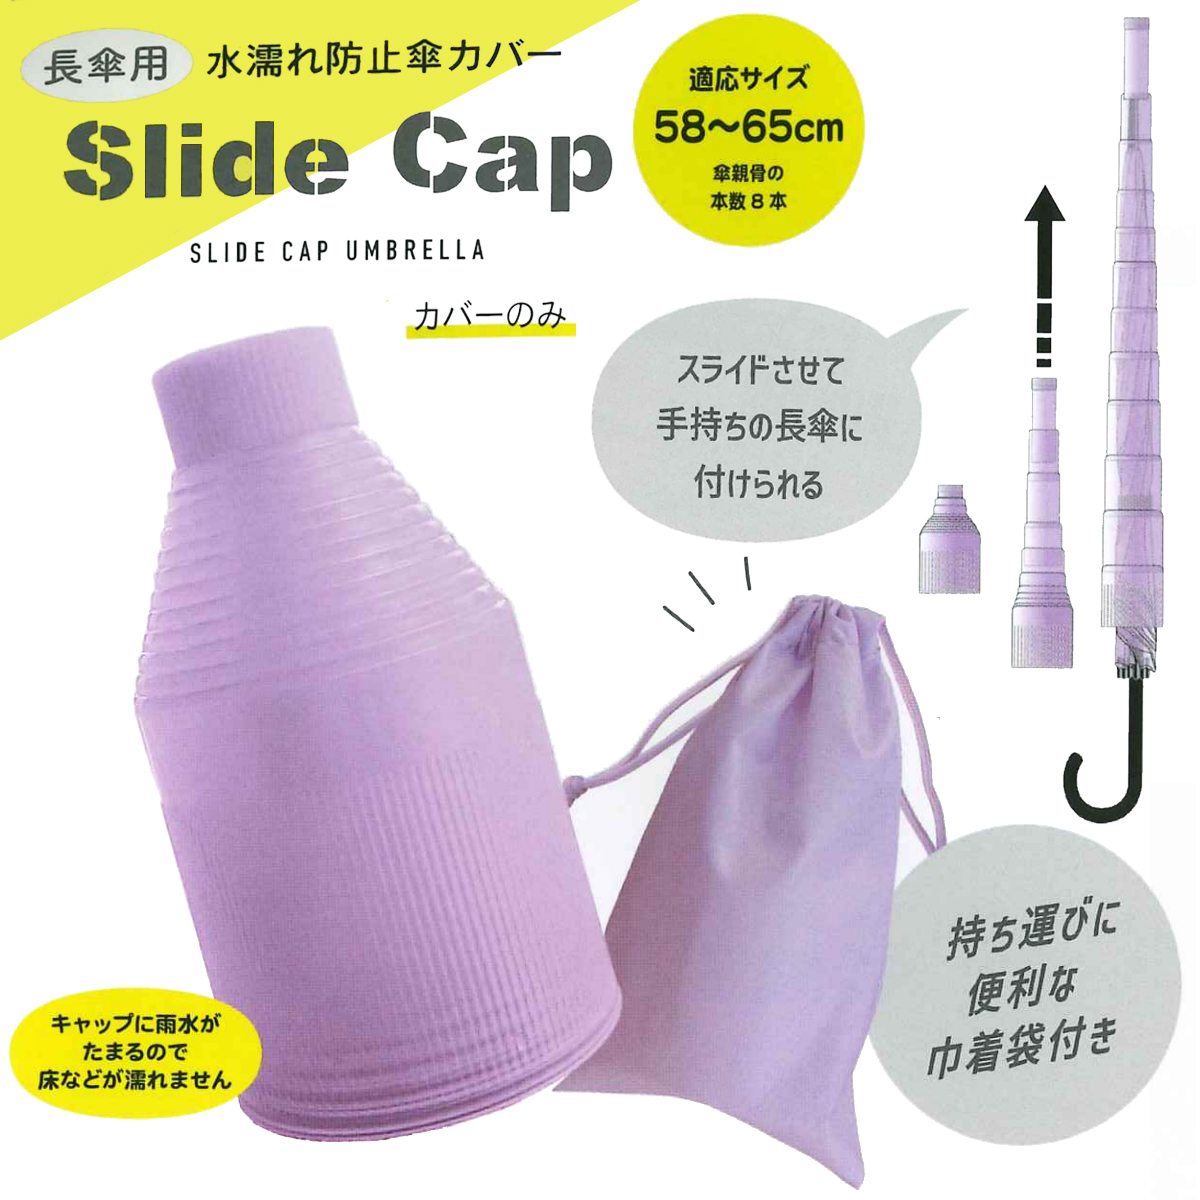 【CRUX】スライドキャップ 水濡れ防止傘カバー 長傘用